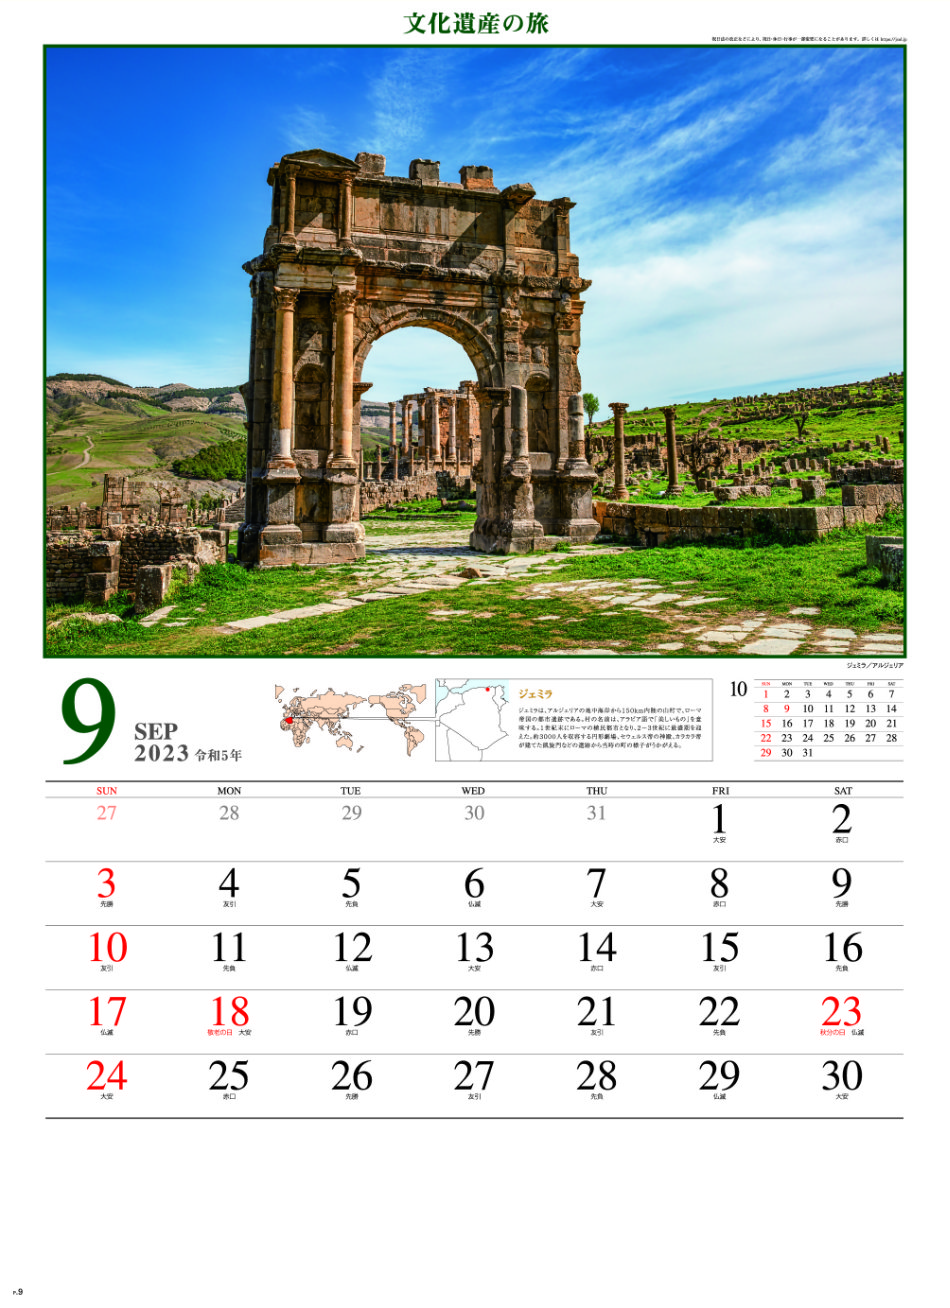 Sg 473 文化遺産の旅 ユネスコ世界遺産 22年カレンダー ユネスコ文化遺産に登録されている寺院 遺跡 街並みを12個厳選しました